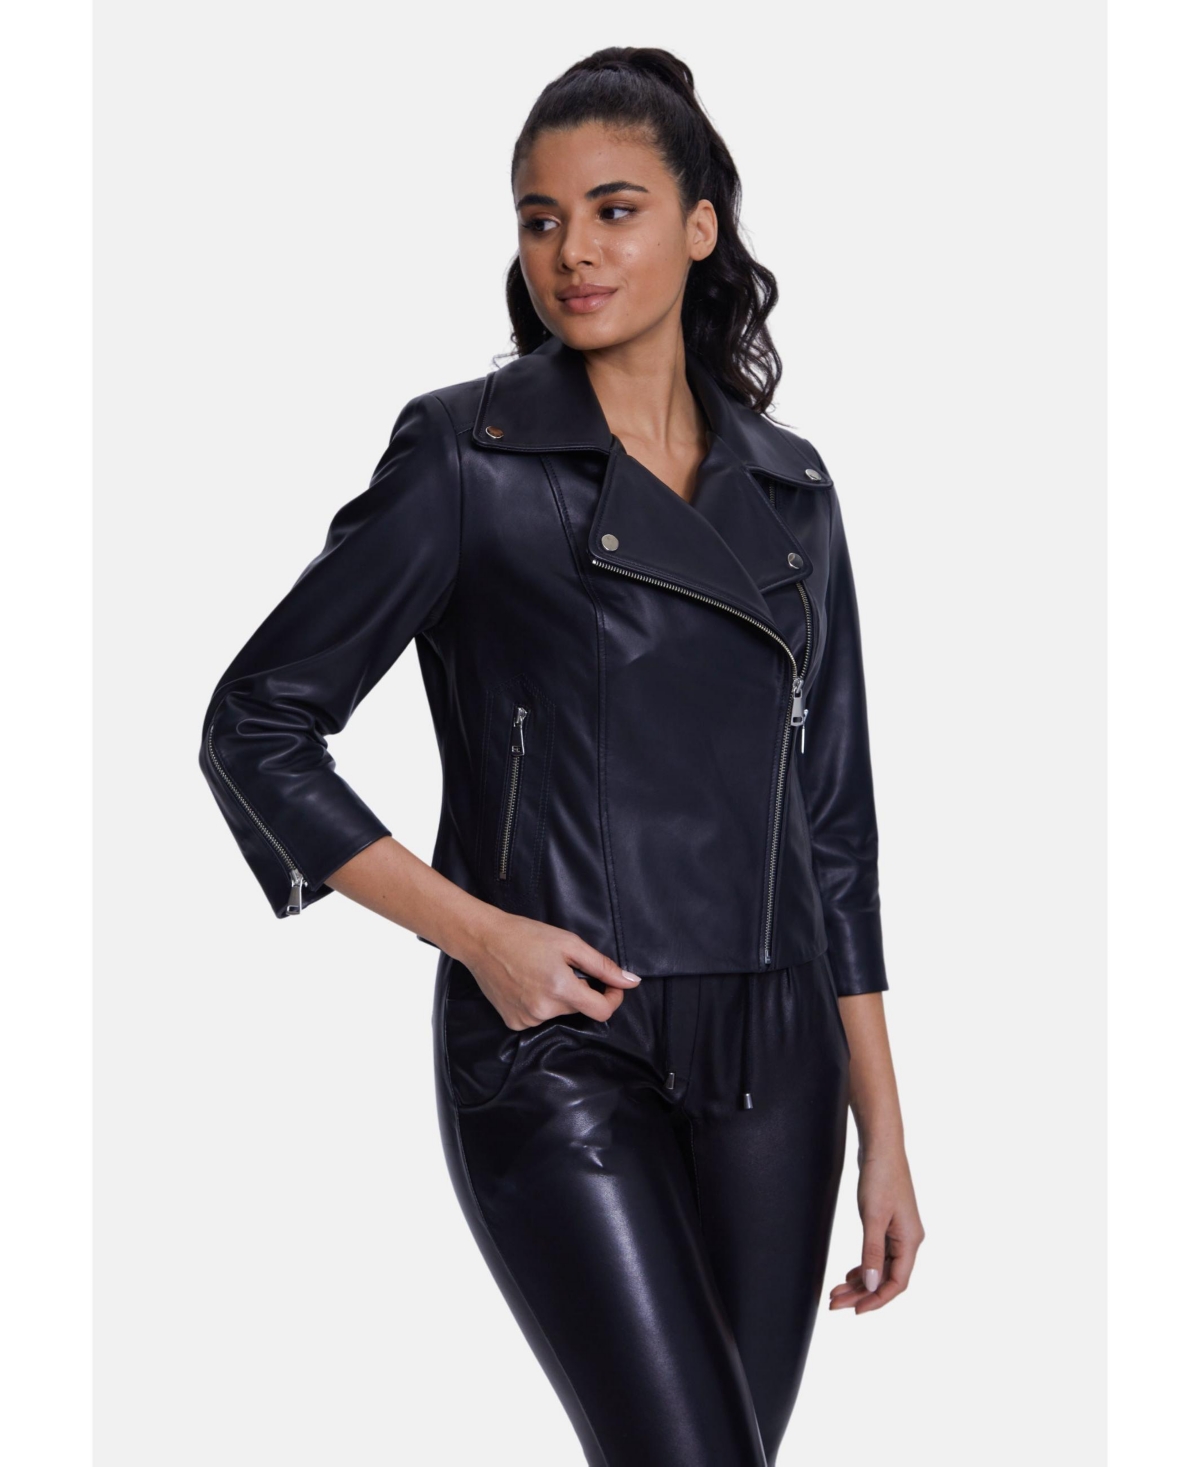 Women's Jacket Half Sleeve, Black - Black